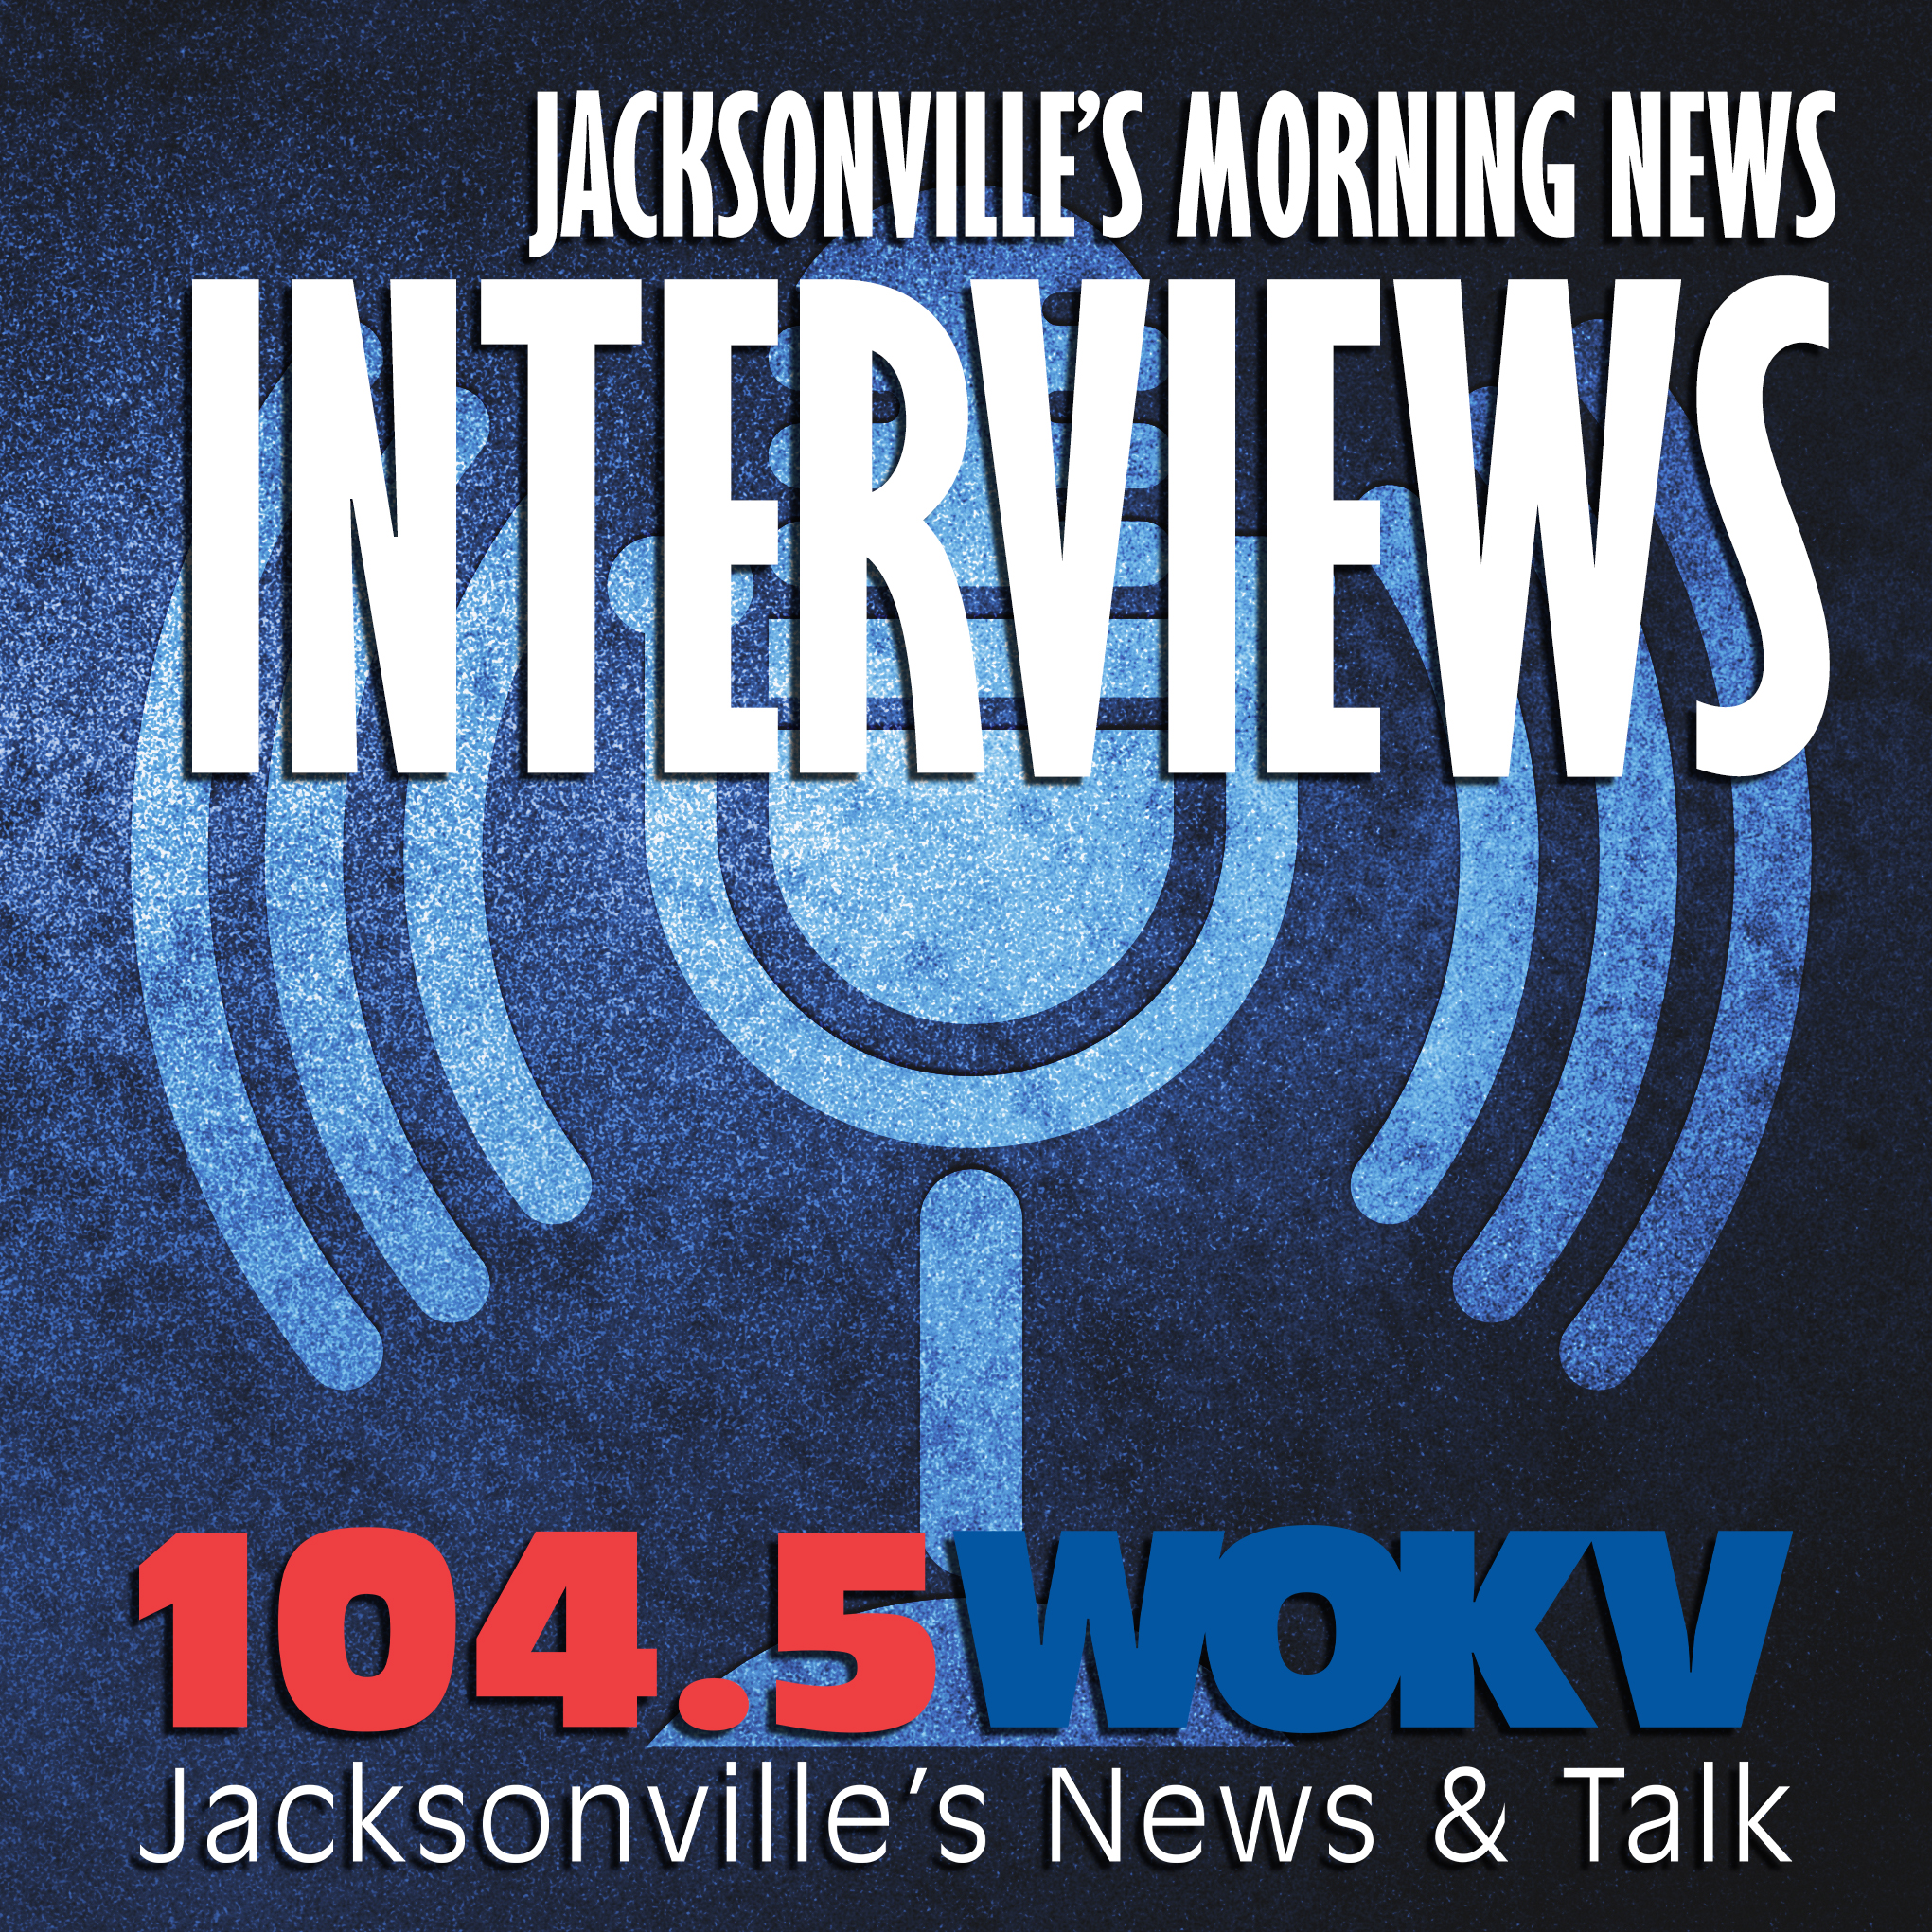 Jacksonville's Morning News Interviews